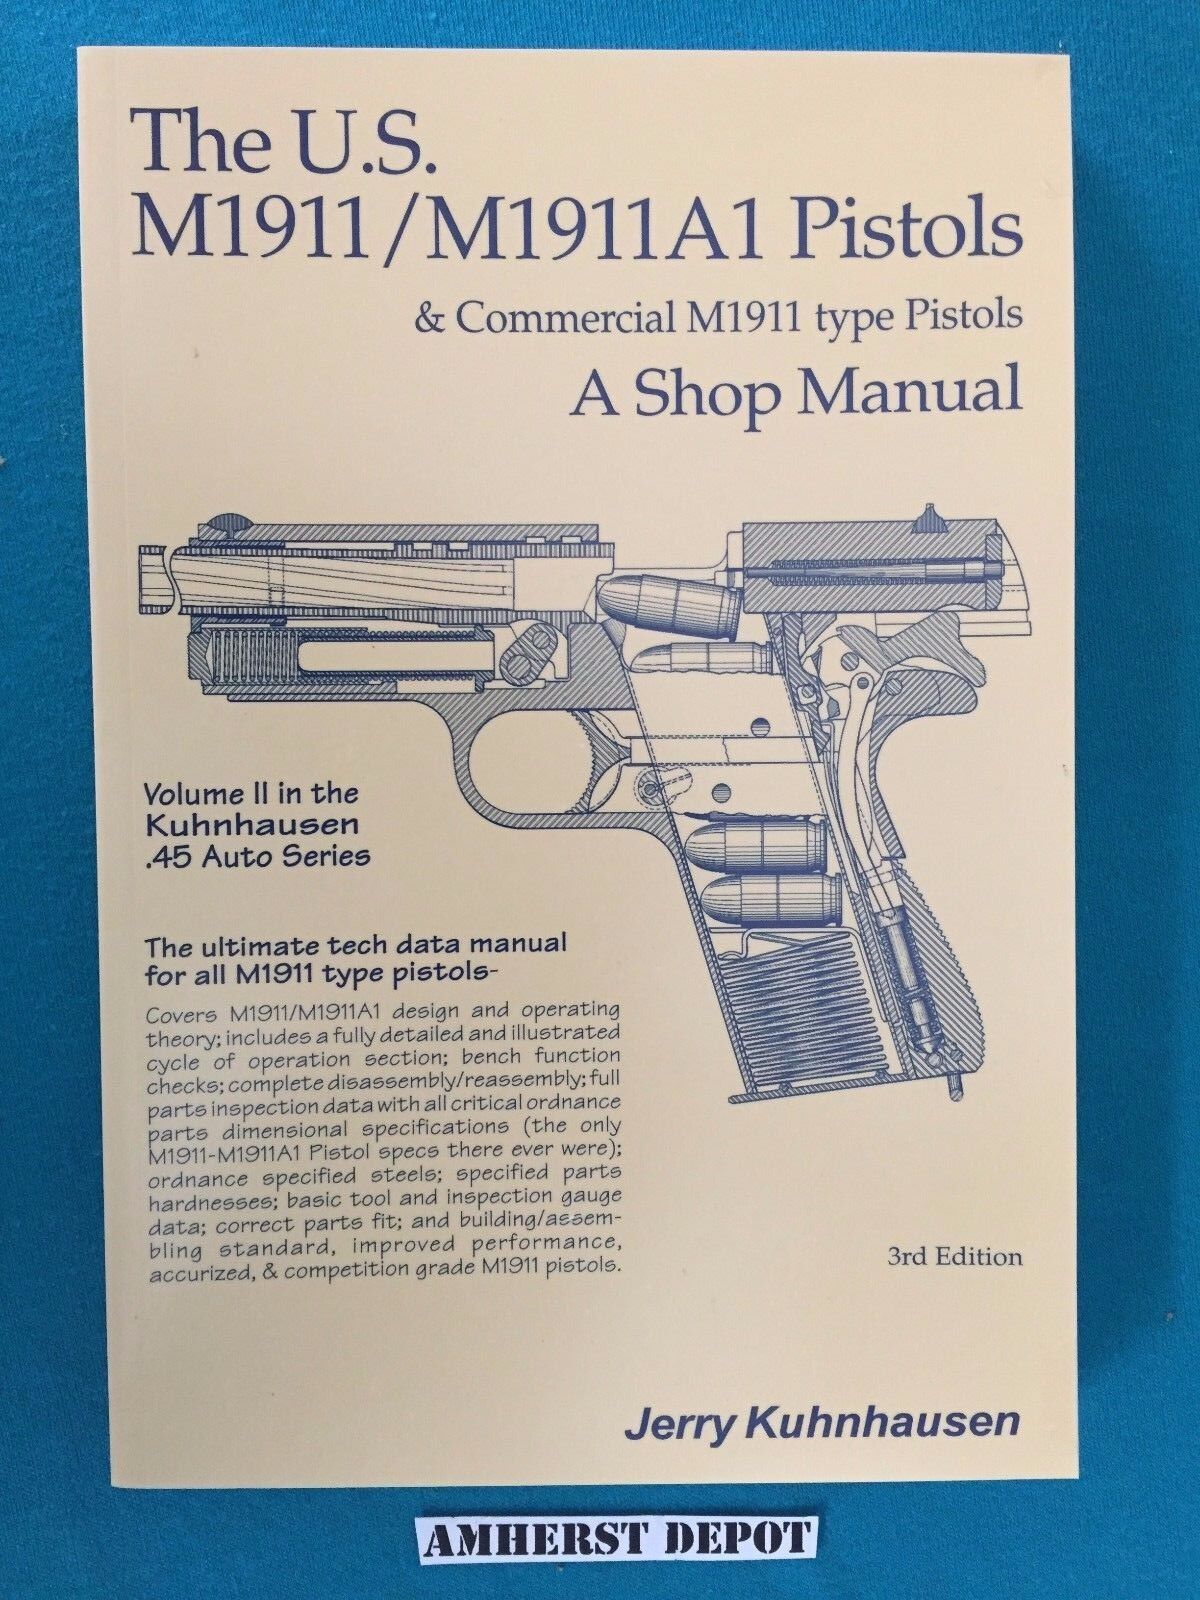 The U.S. M1911/M1911A1 Pistols A Shop Manual Vol II by Jerry Kuhnhausen Book NEW